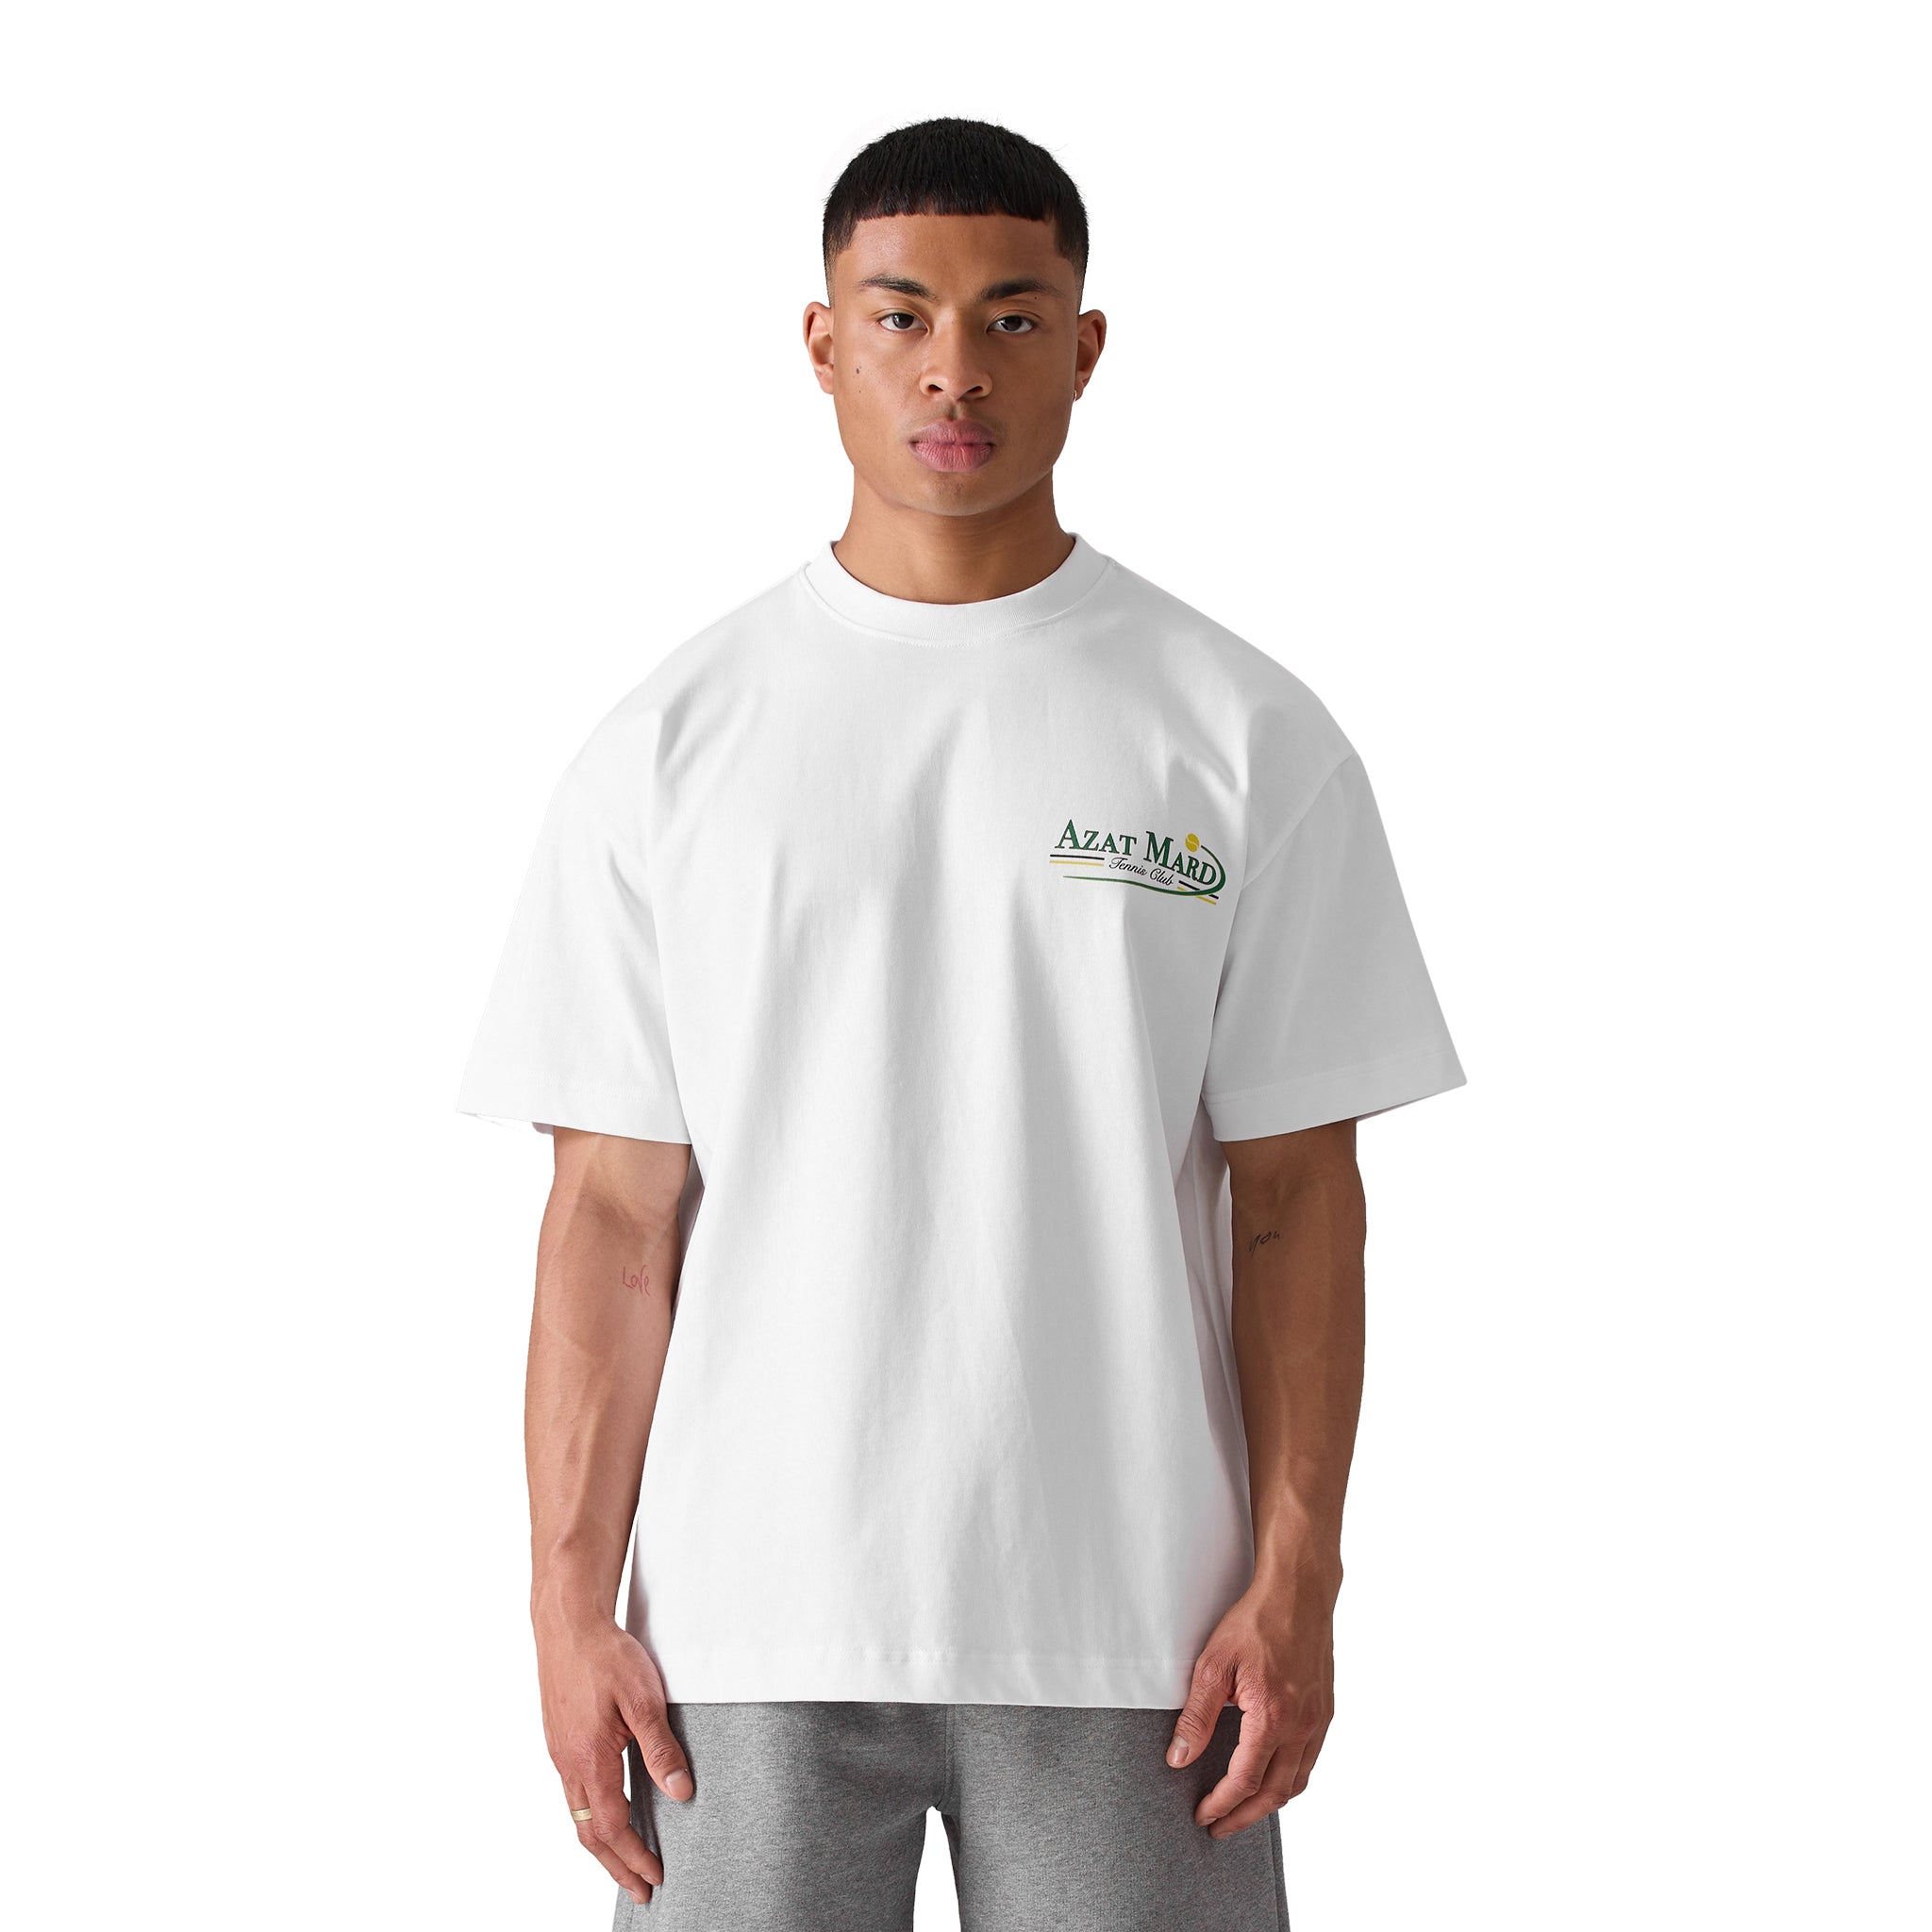 Azat Mard Tennis Club T Shirt White SS23150